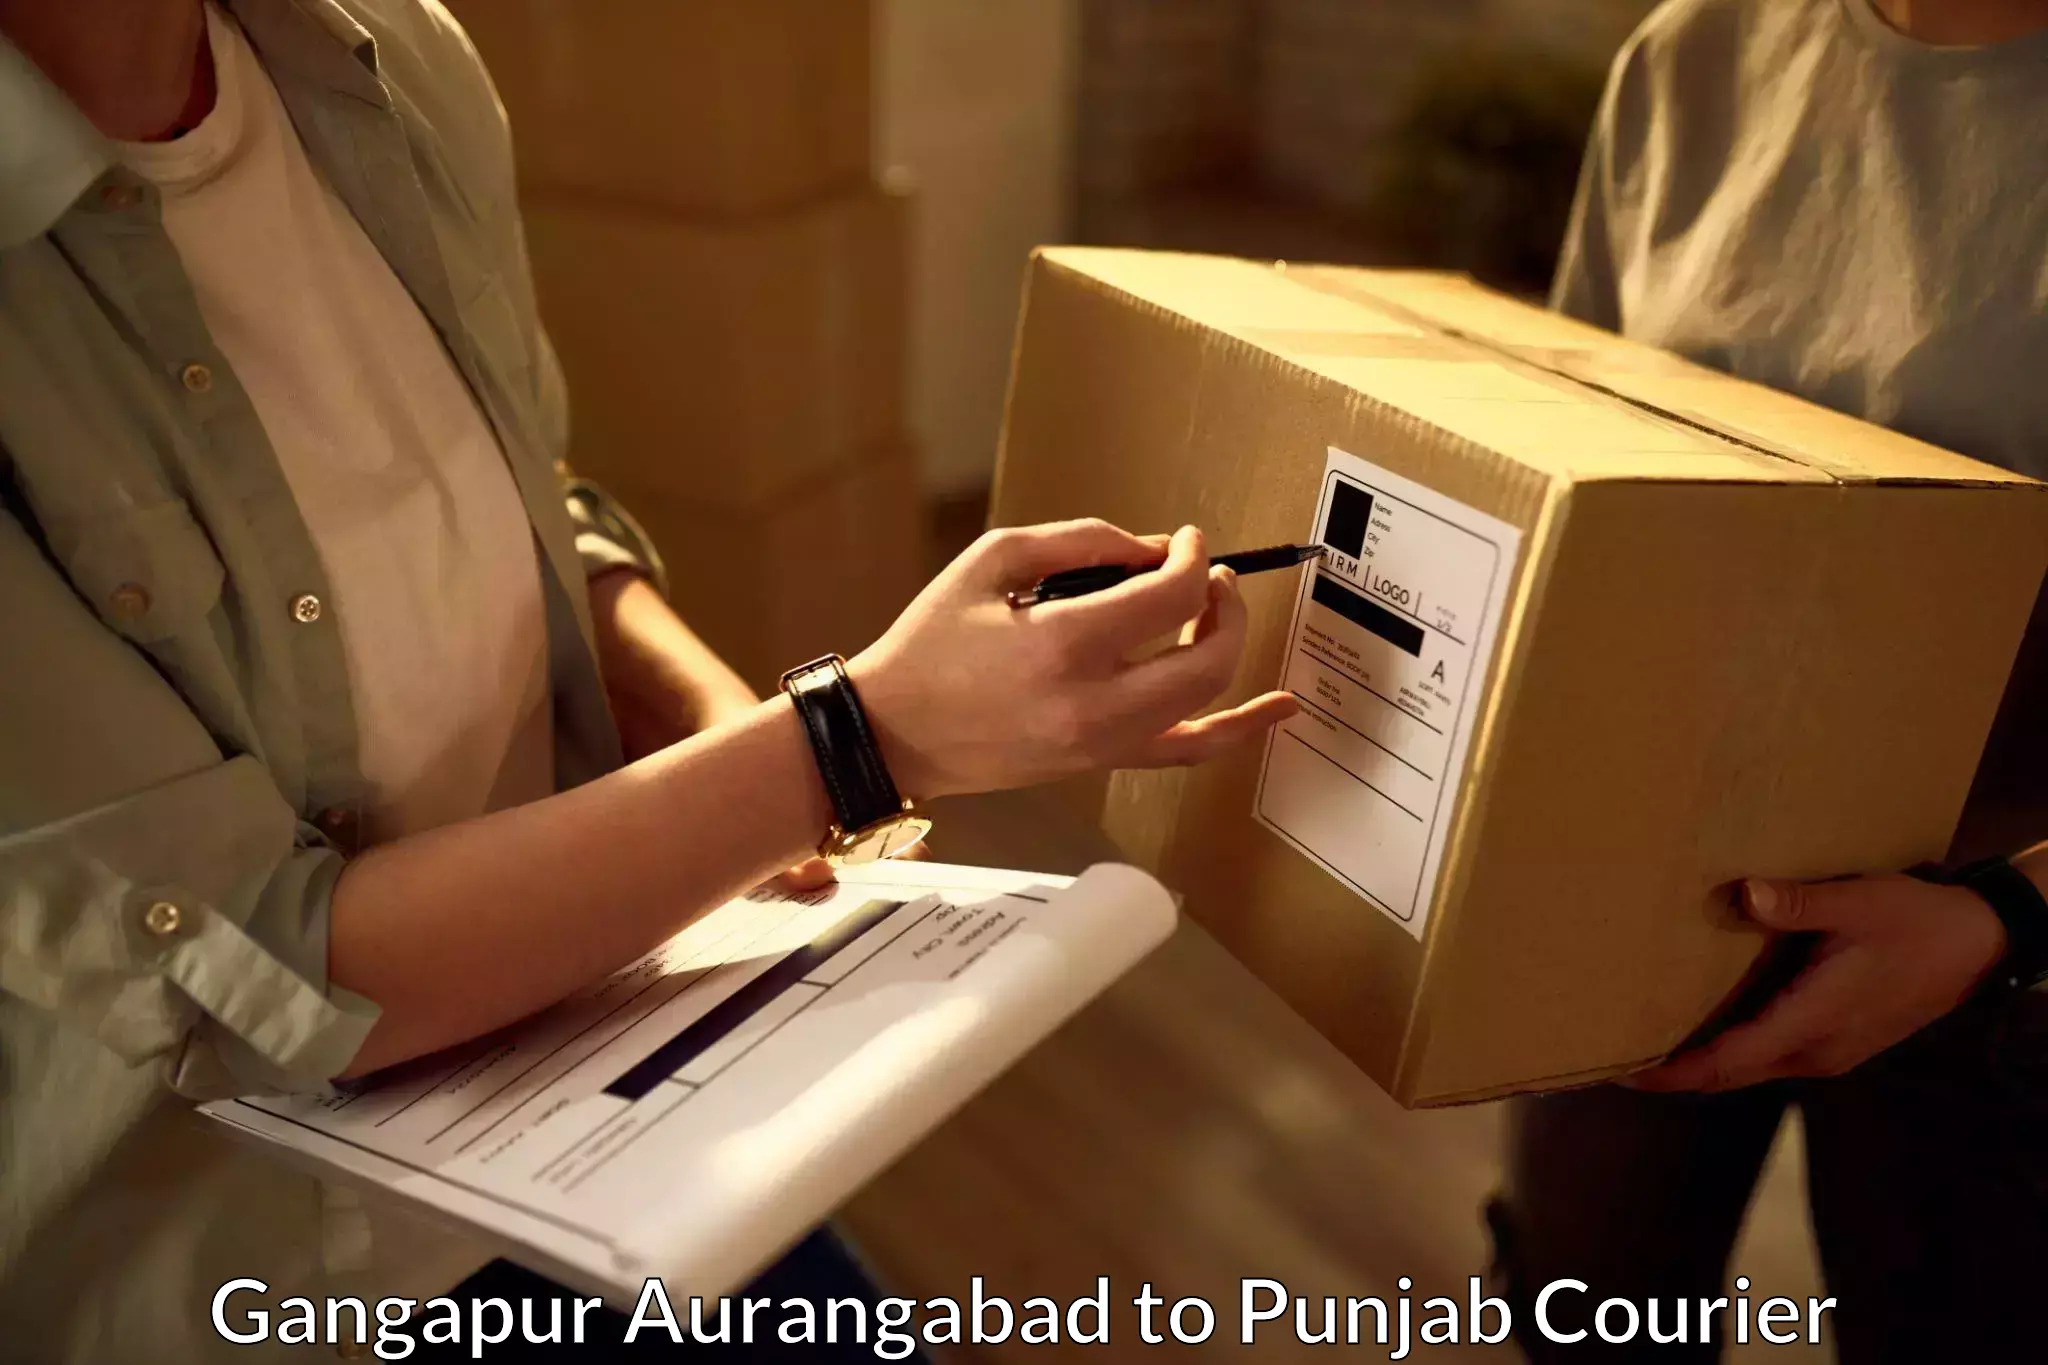 International courier networks Gangapur Aurangabad to Dhilwan